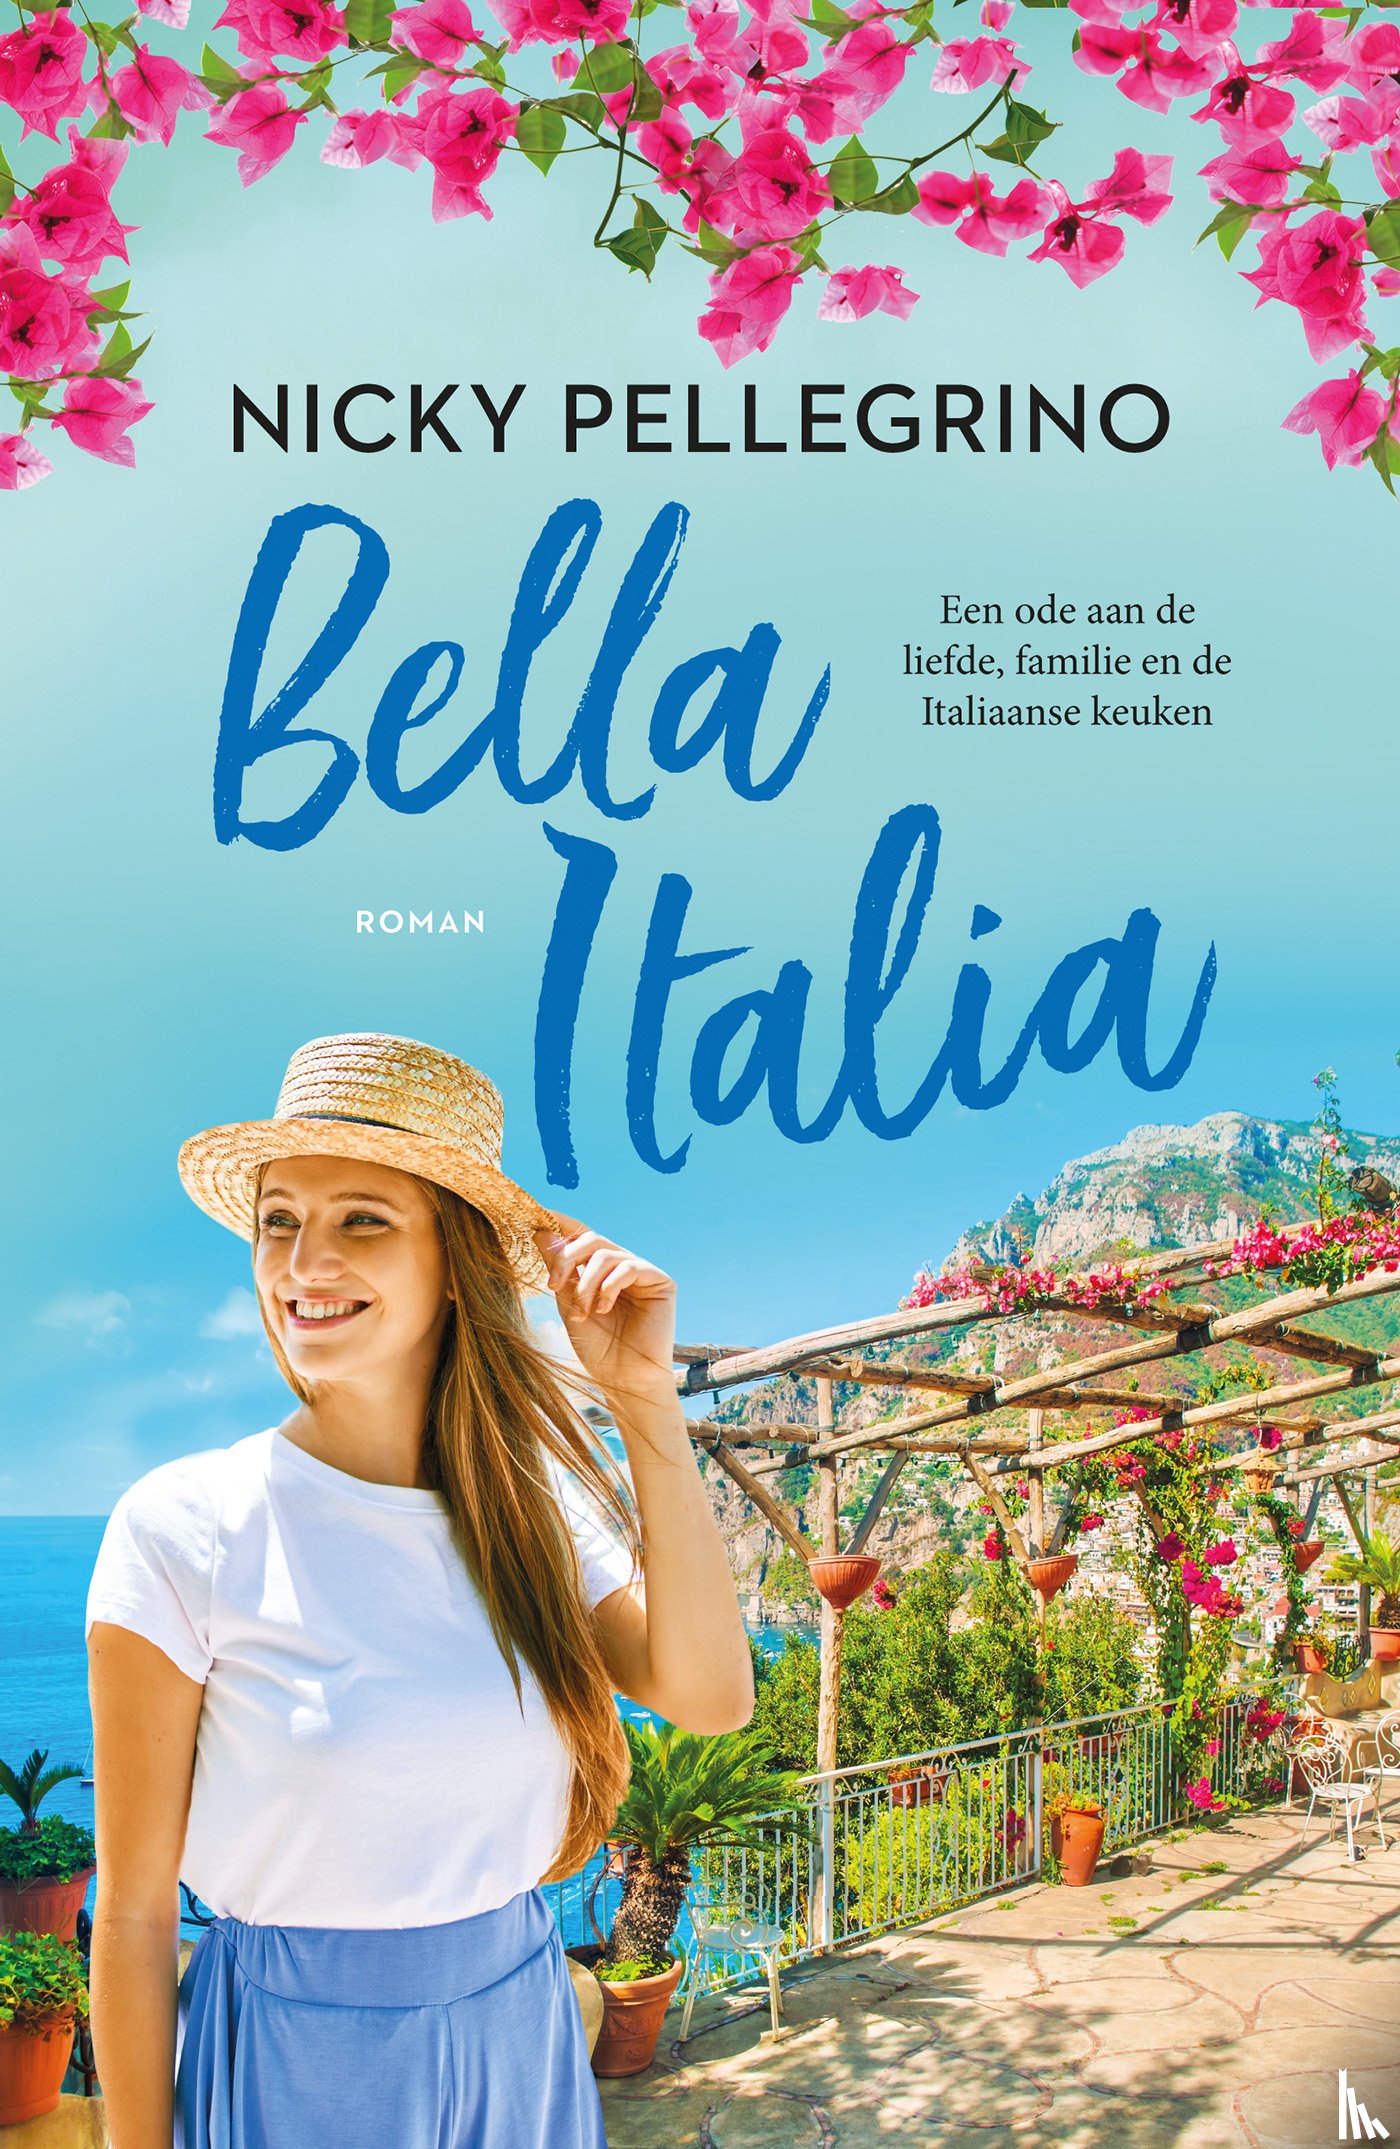 Pellegrino, Nicky - Bella Italia